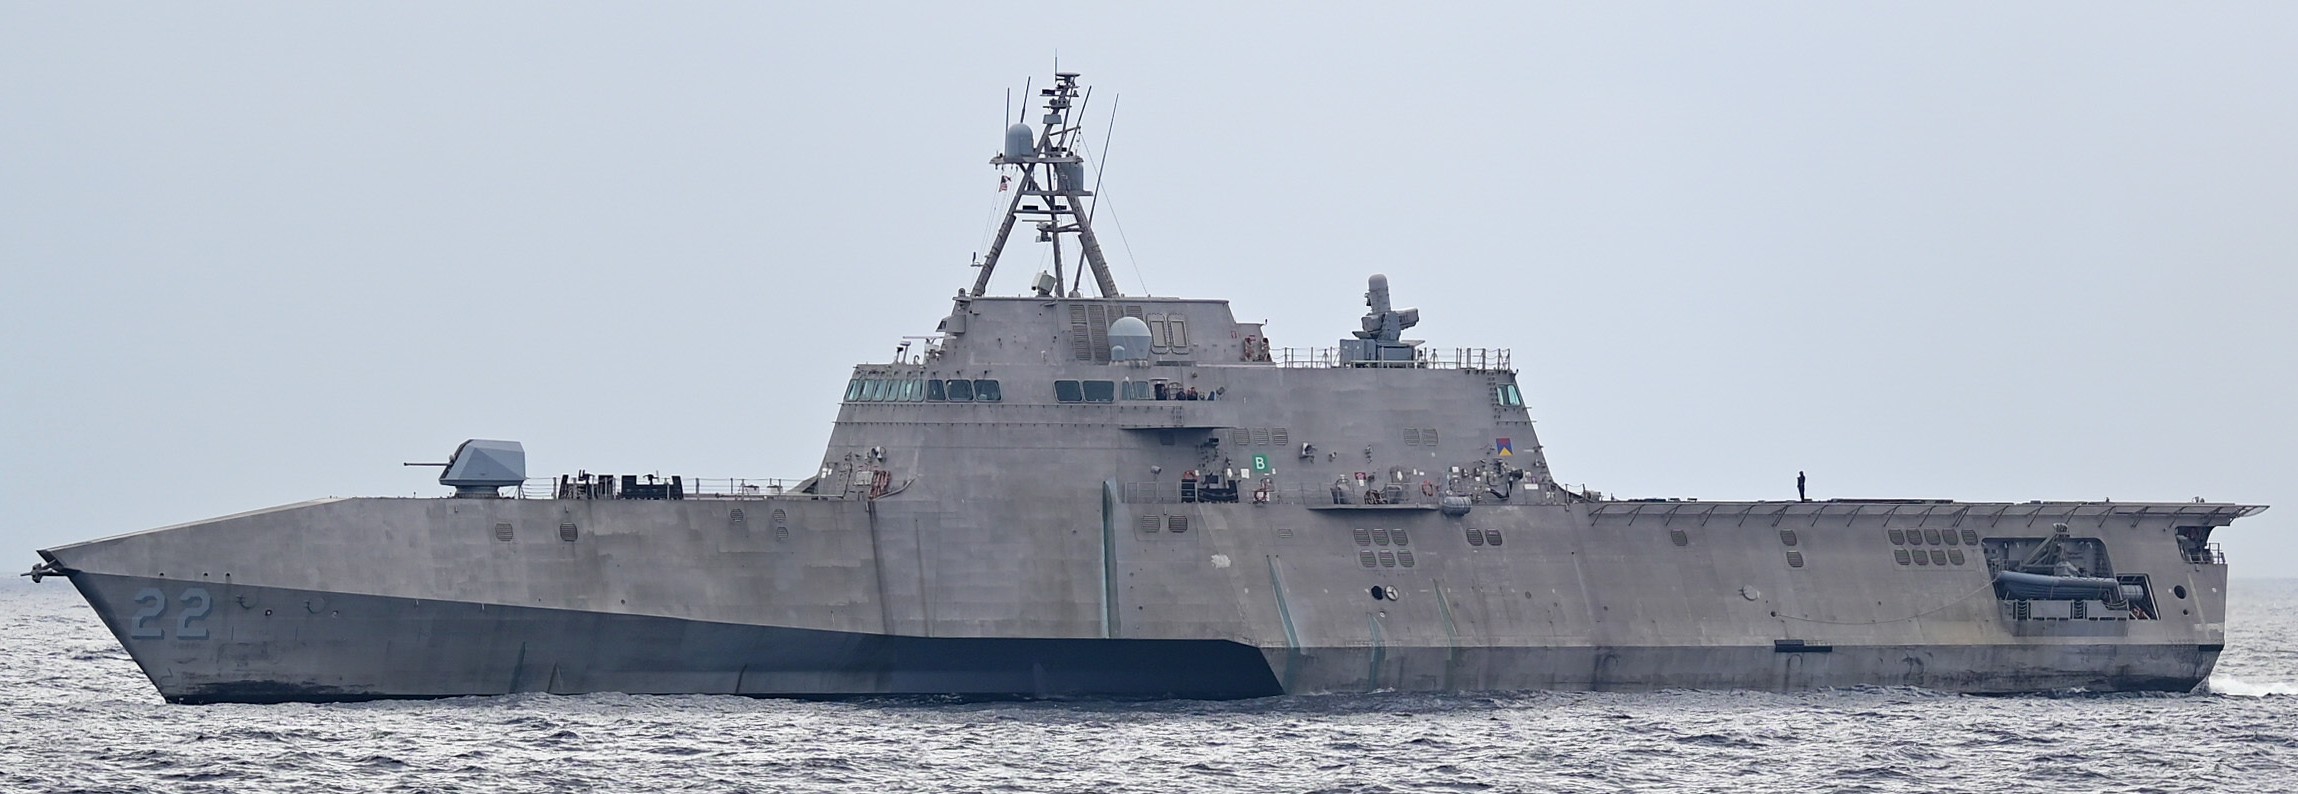 lcs-22 uss kansas city independence class littoral combat ship us navy pacific ocean 24